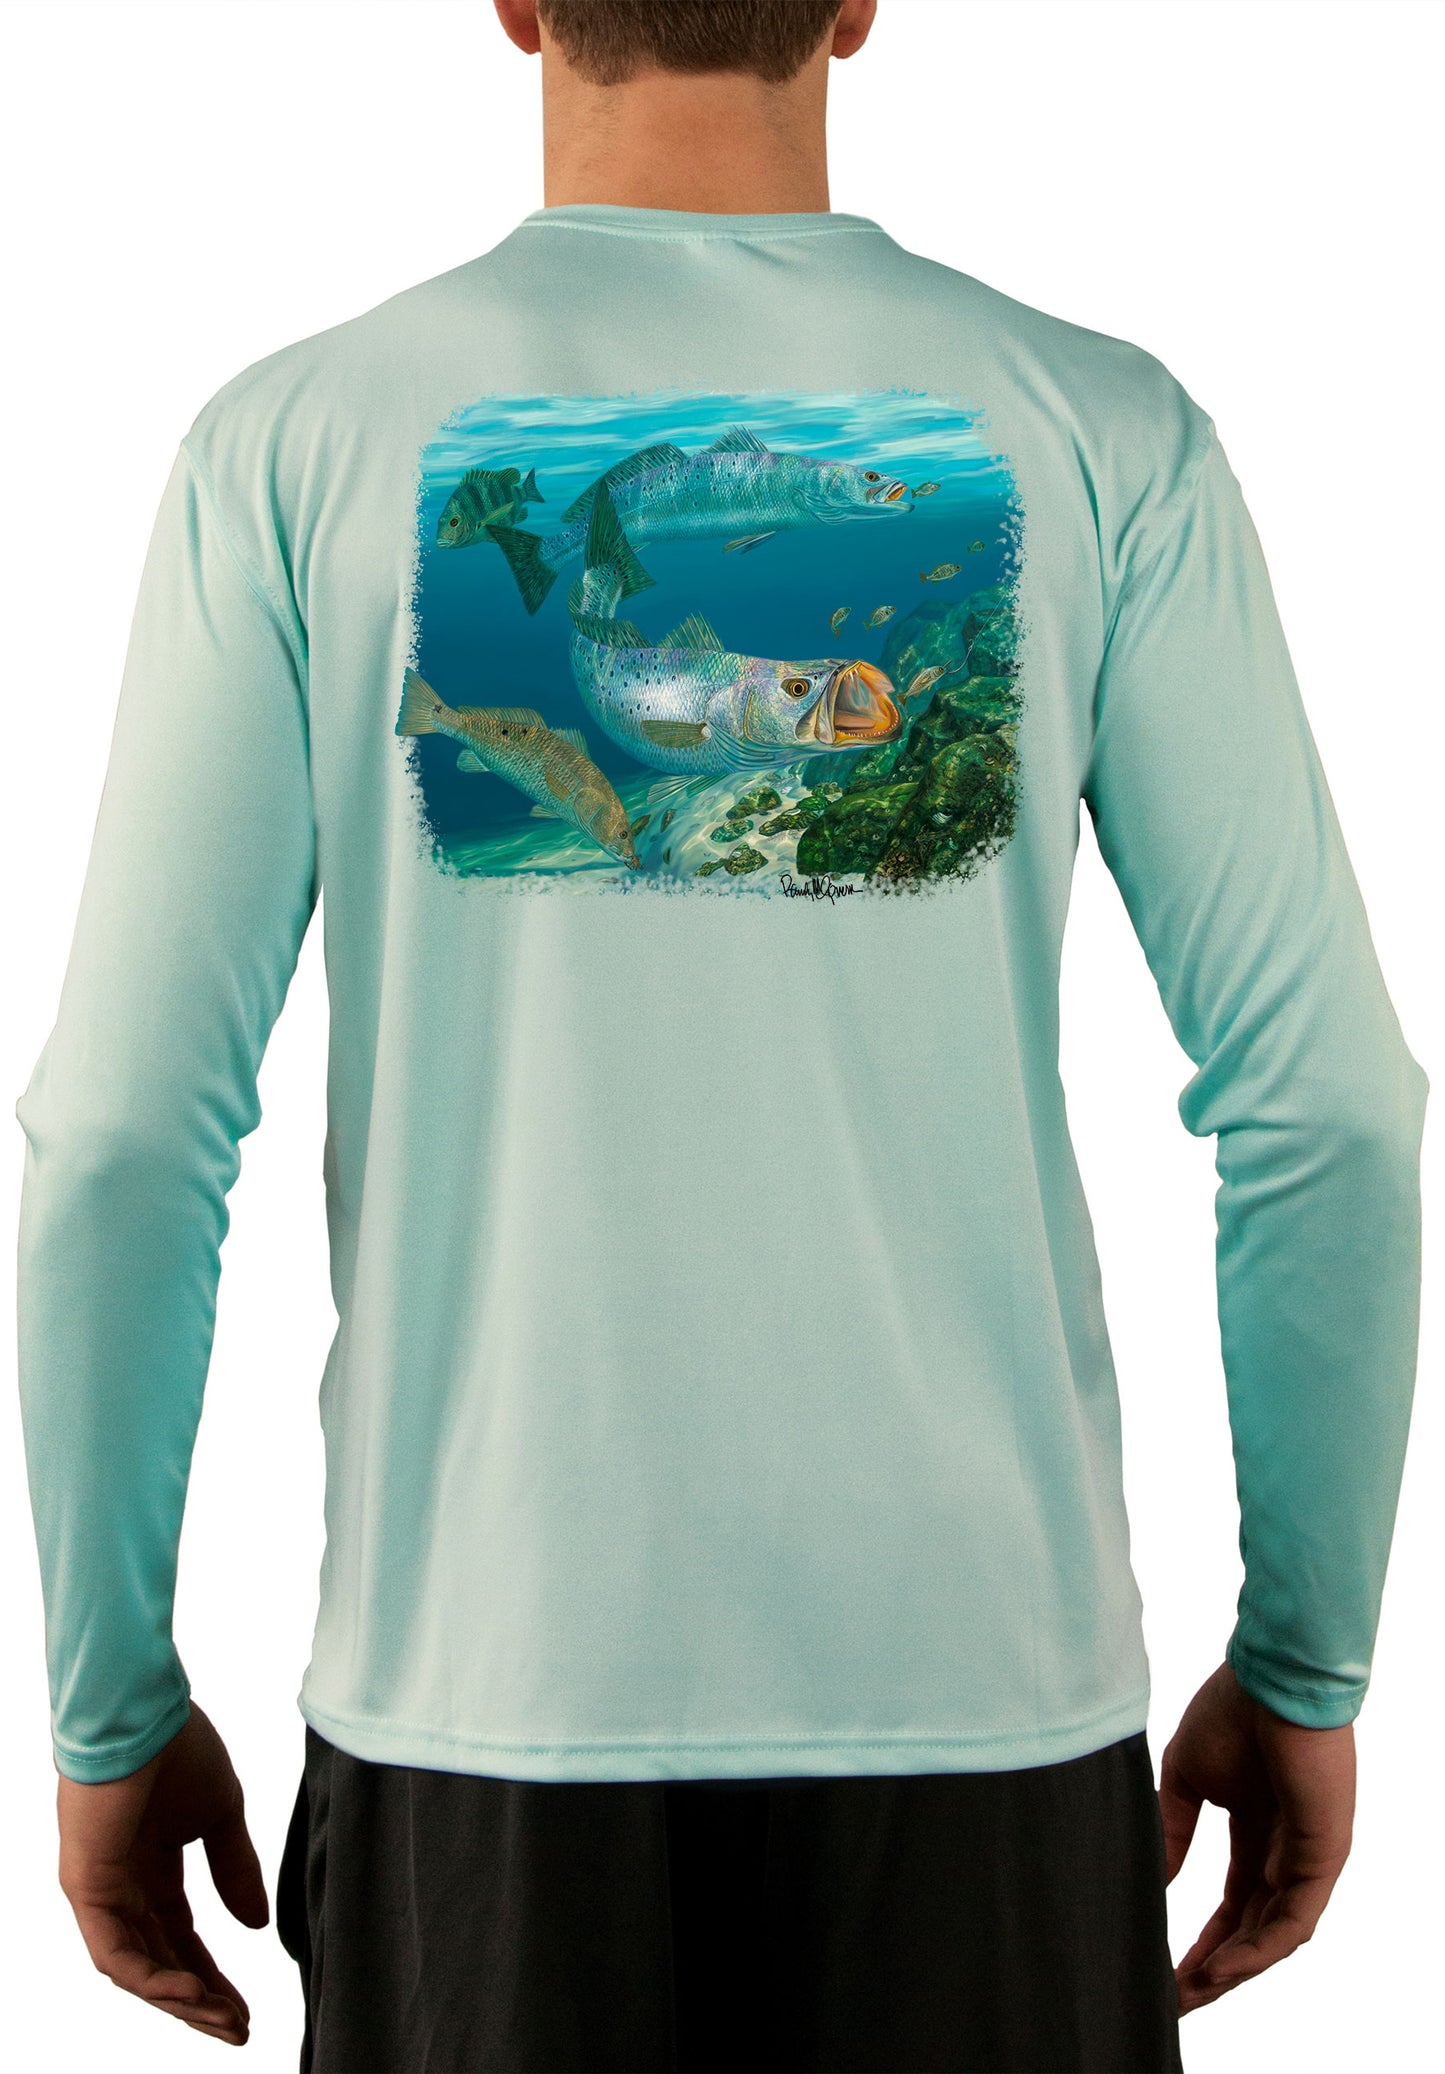 Baitchasers Redfish Sheepshead Trout Skiff Life Fishing Shirts For Men